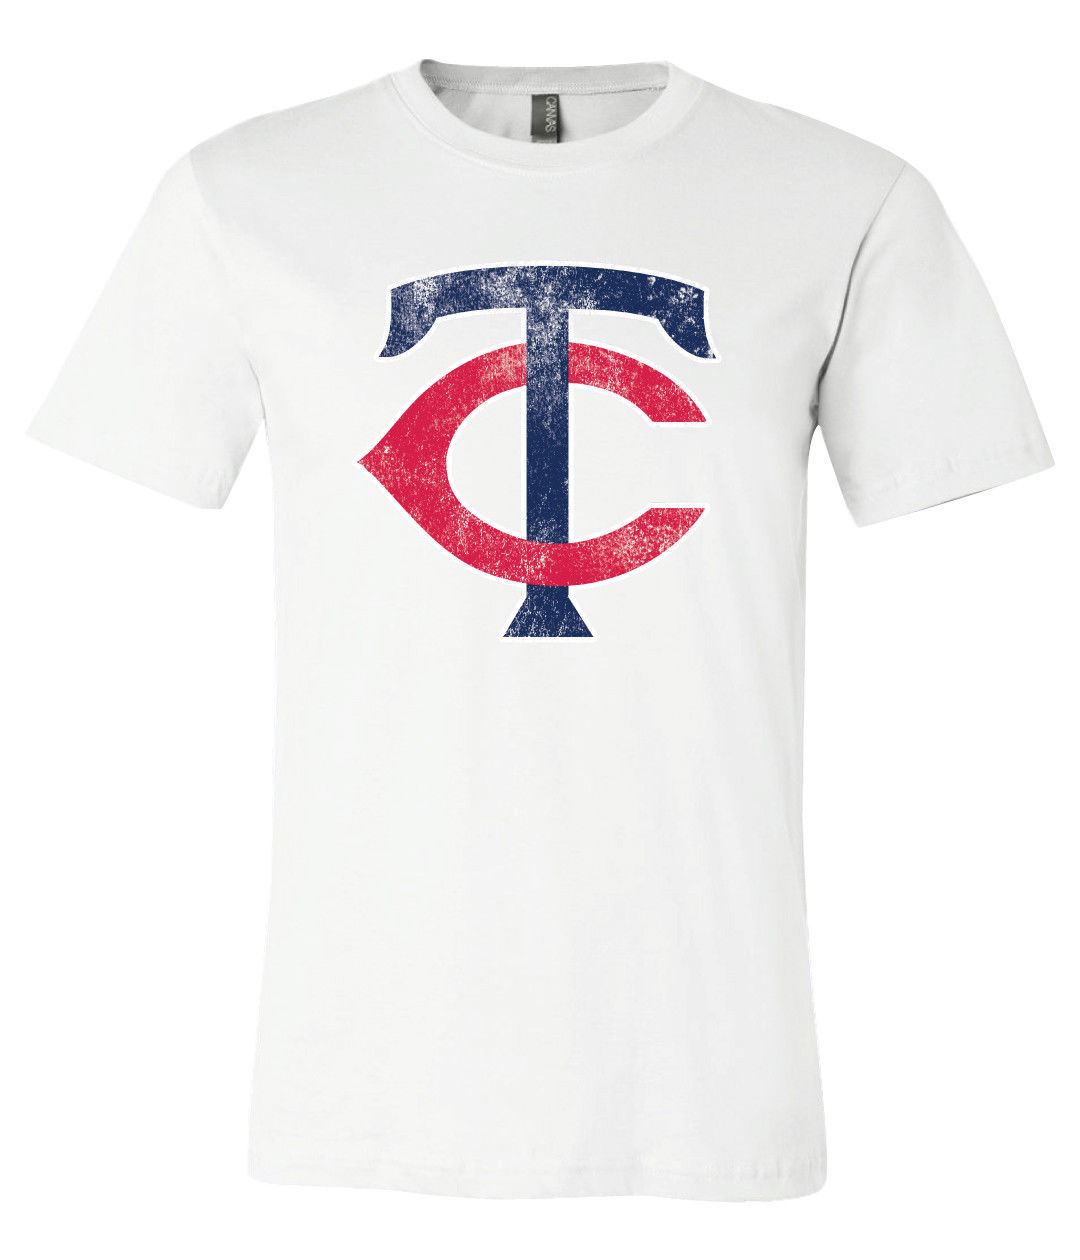 Minnesota Twins T-Shirts for Sale